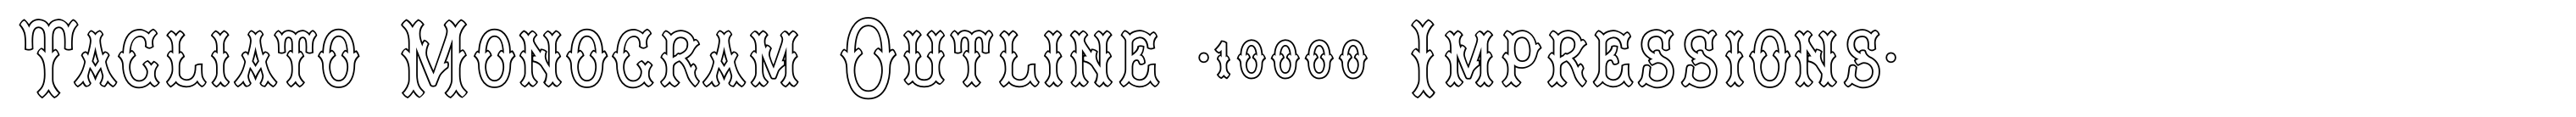 Tagliato Monogram Outline (10000 Impressions)